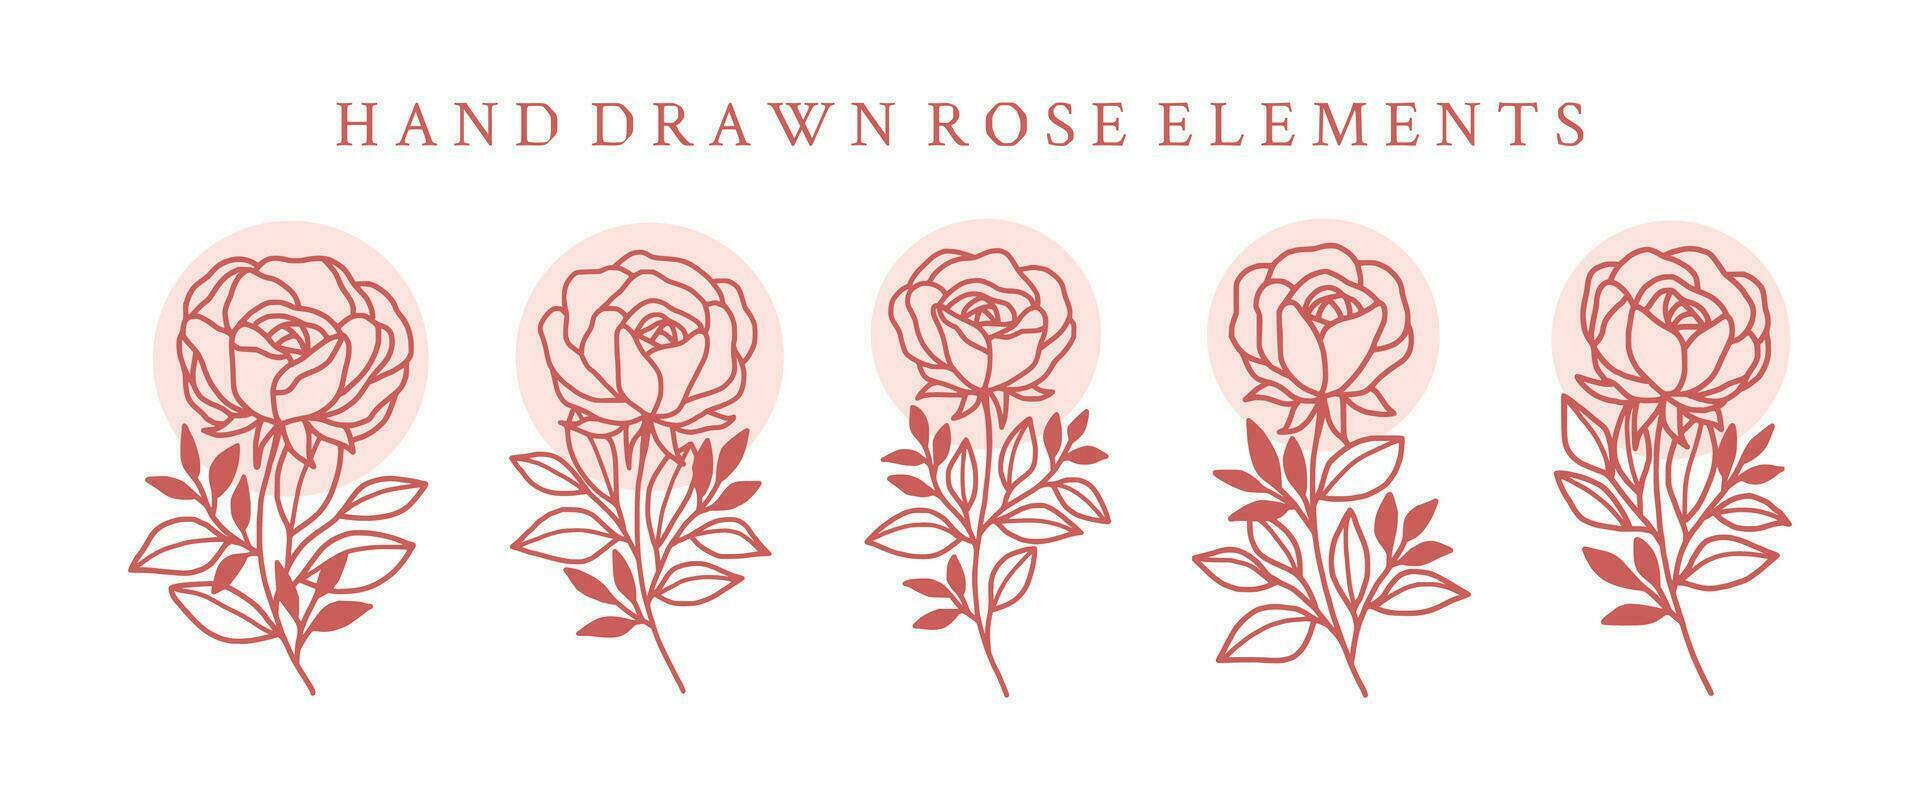 Vintage hand drawn flower logo element collection vector